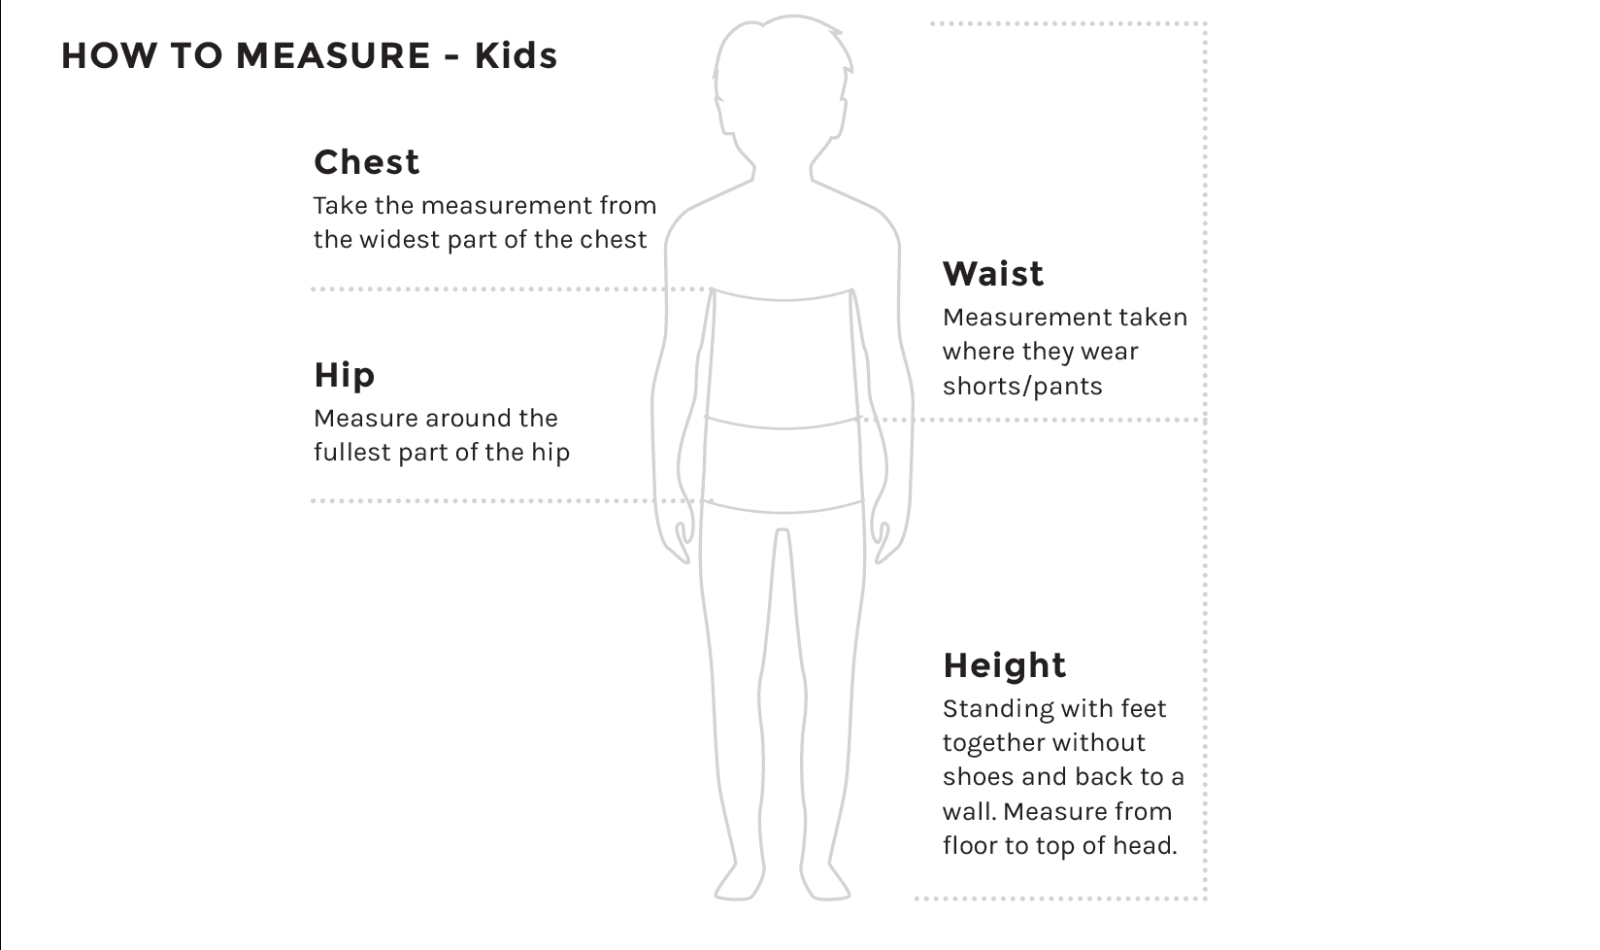 How to measure - Kids